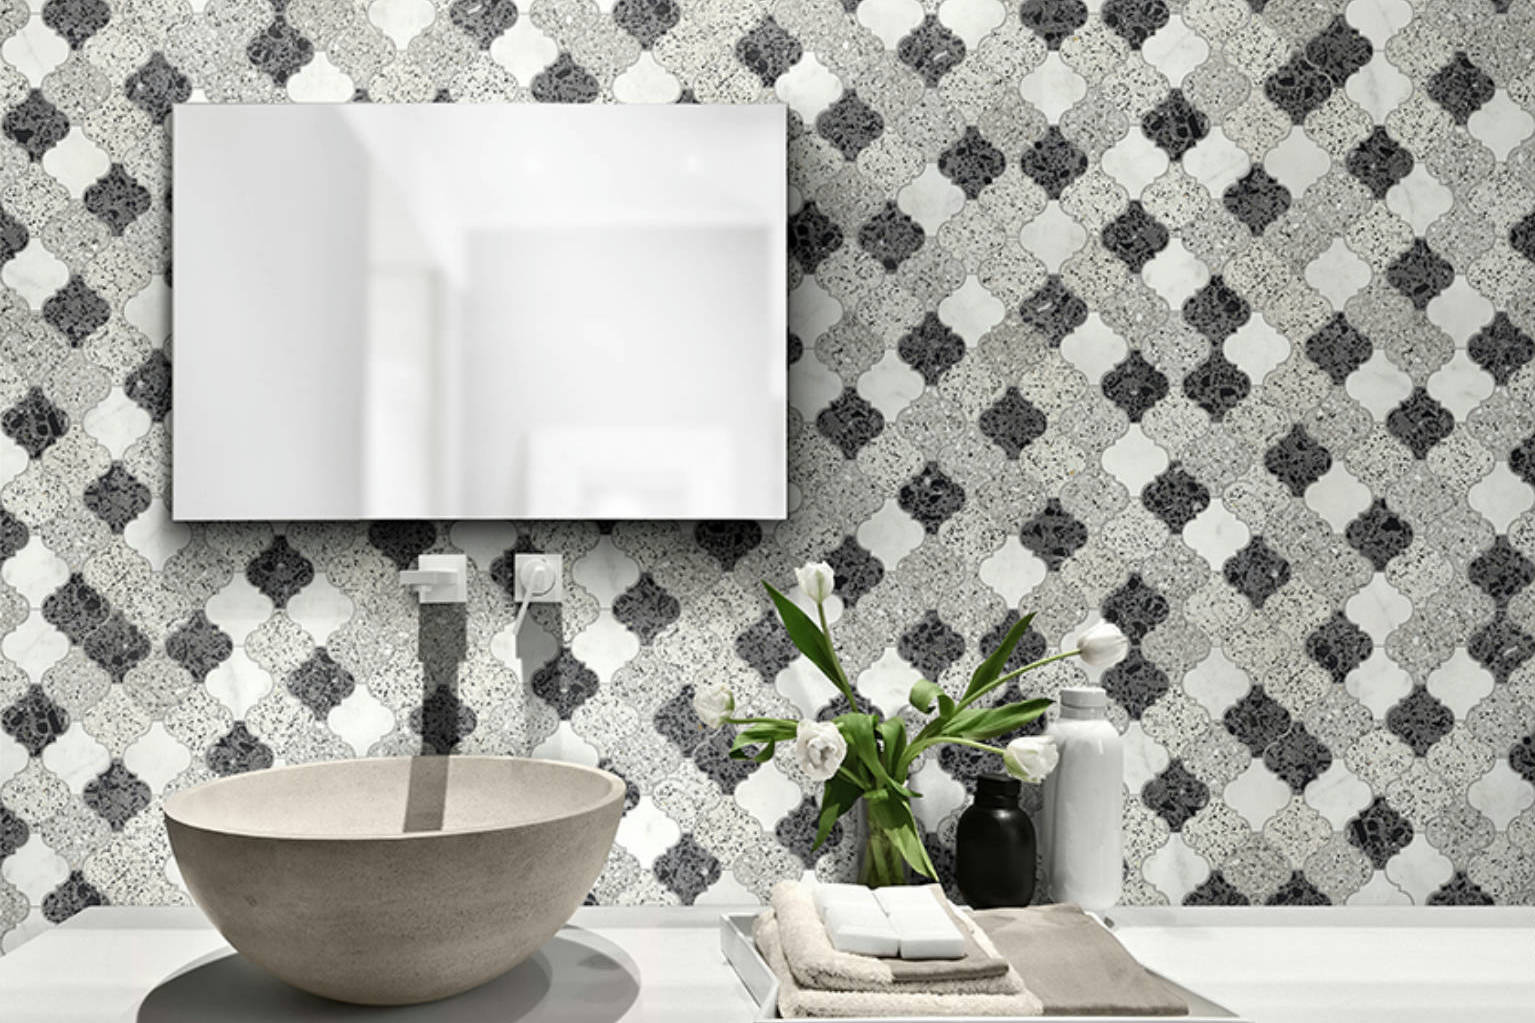 Lantern Terrazzo Marble White, Grey, Black Mix Mosaic | Qualis Ceramica | Luxury Tile and Vinyl at affordable prices